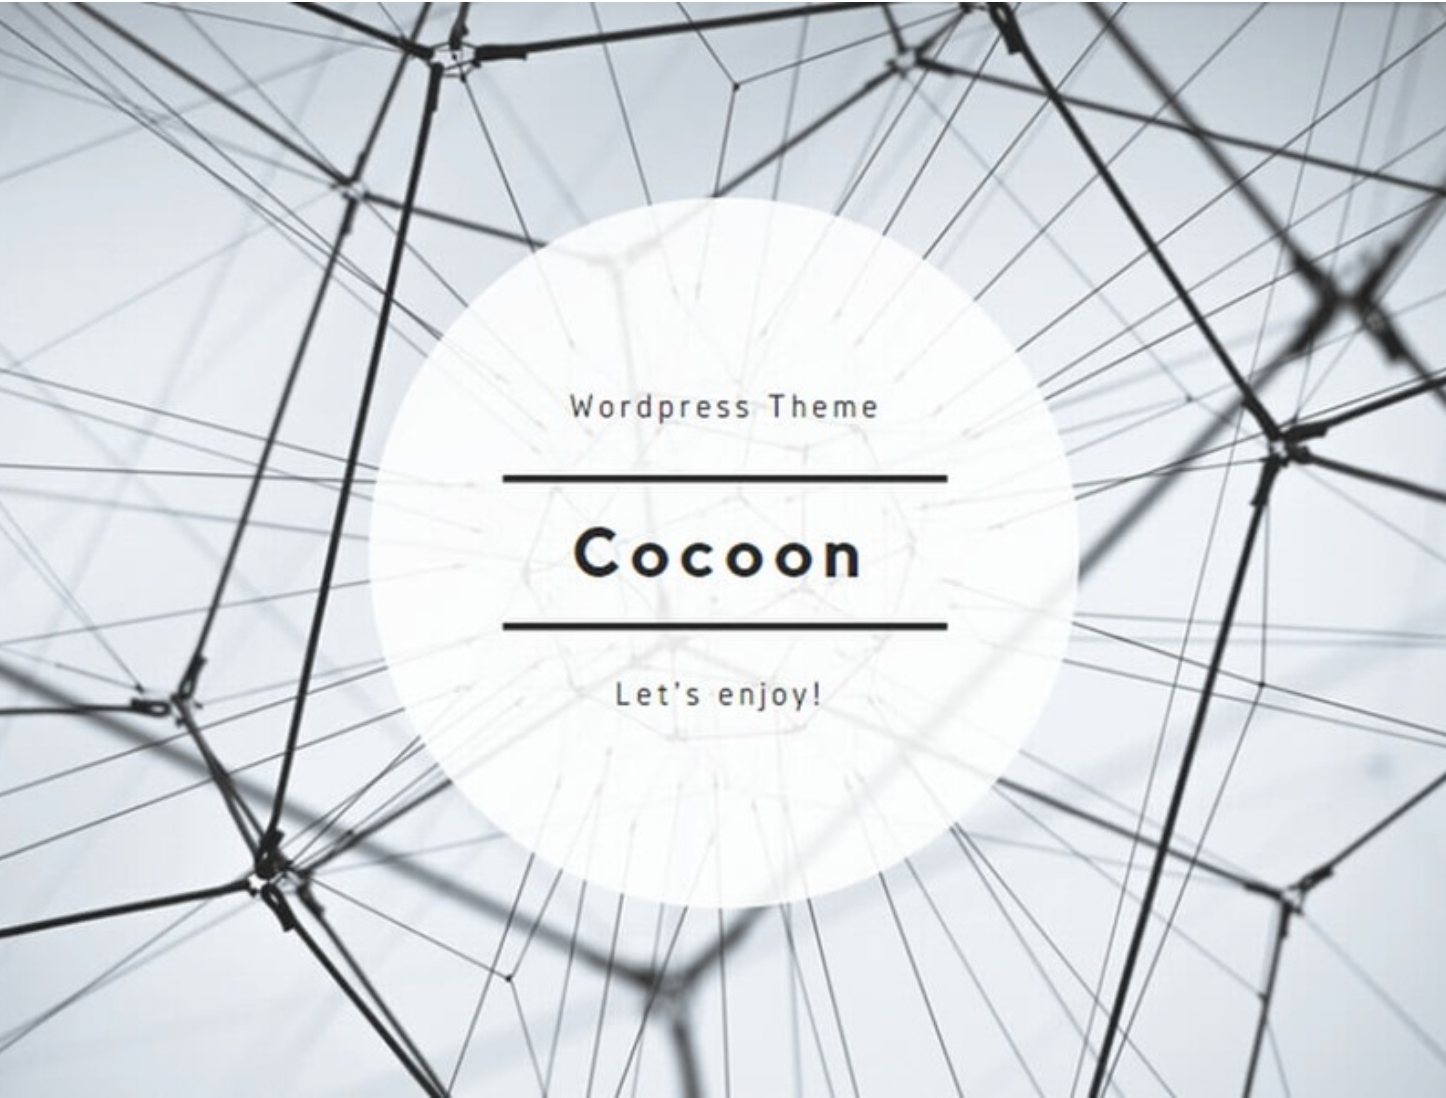 Coccoonテーマをワードプレス（ WordPress）に設定する